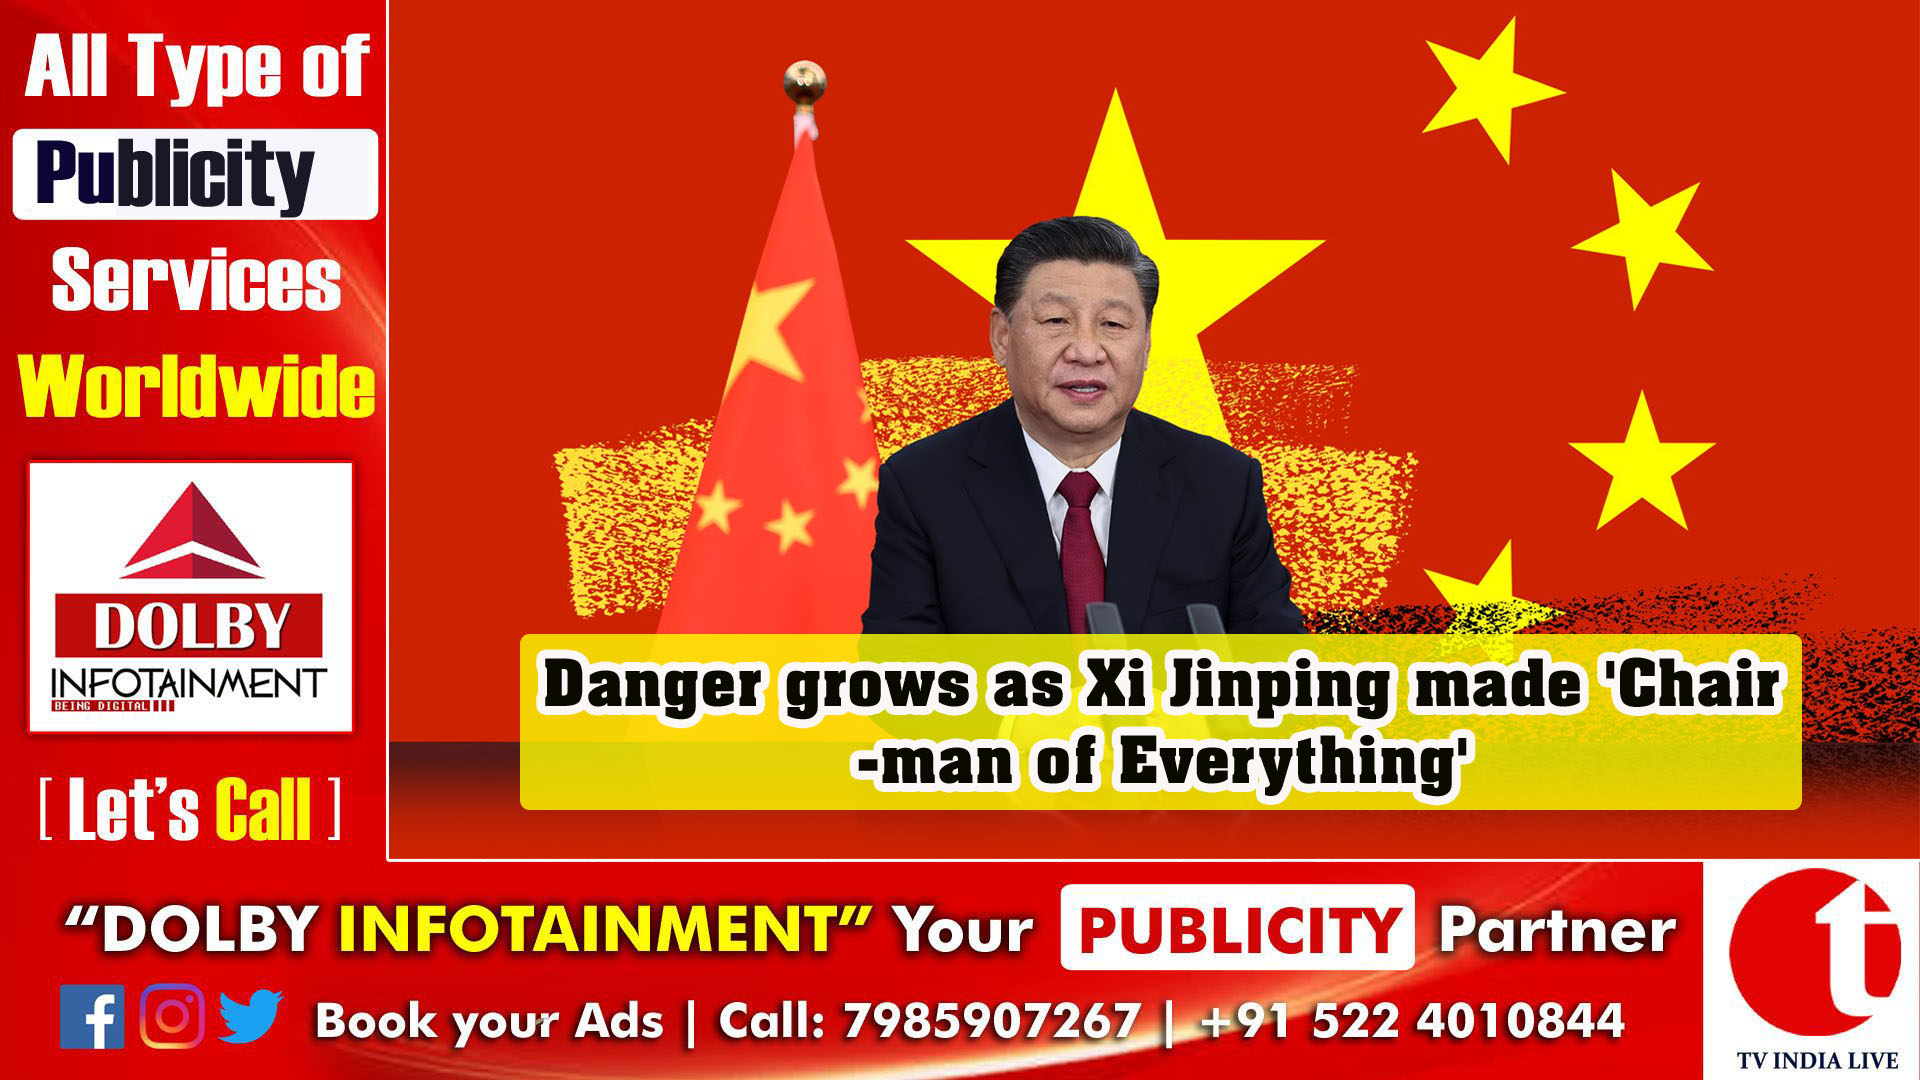 Danger grows as Xi Jinping made 'Chairman of Everything'